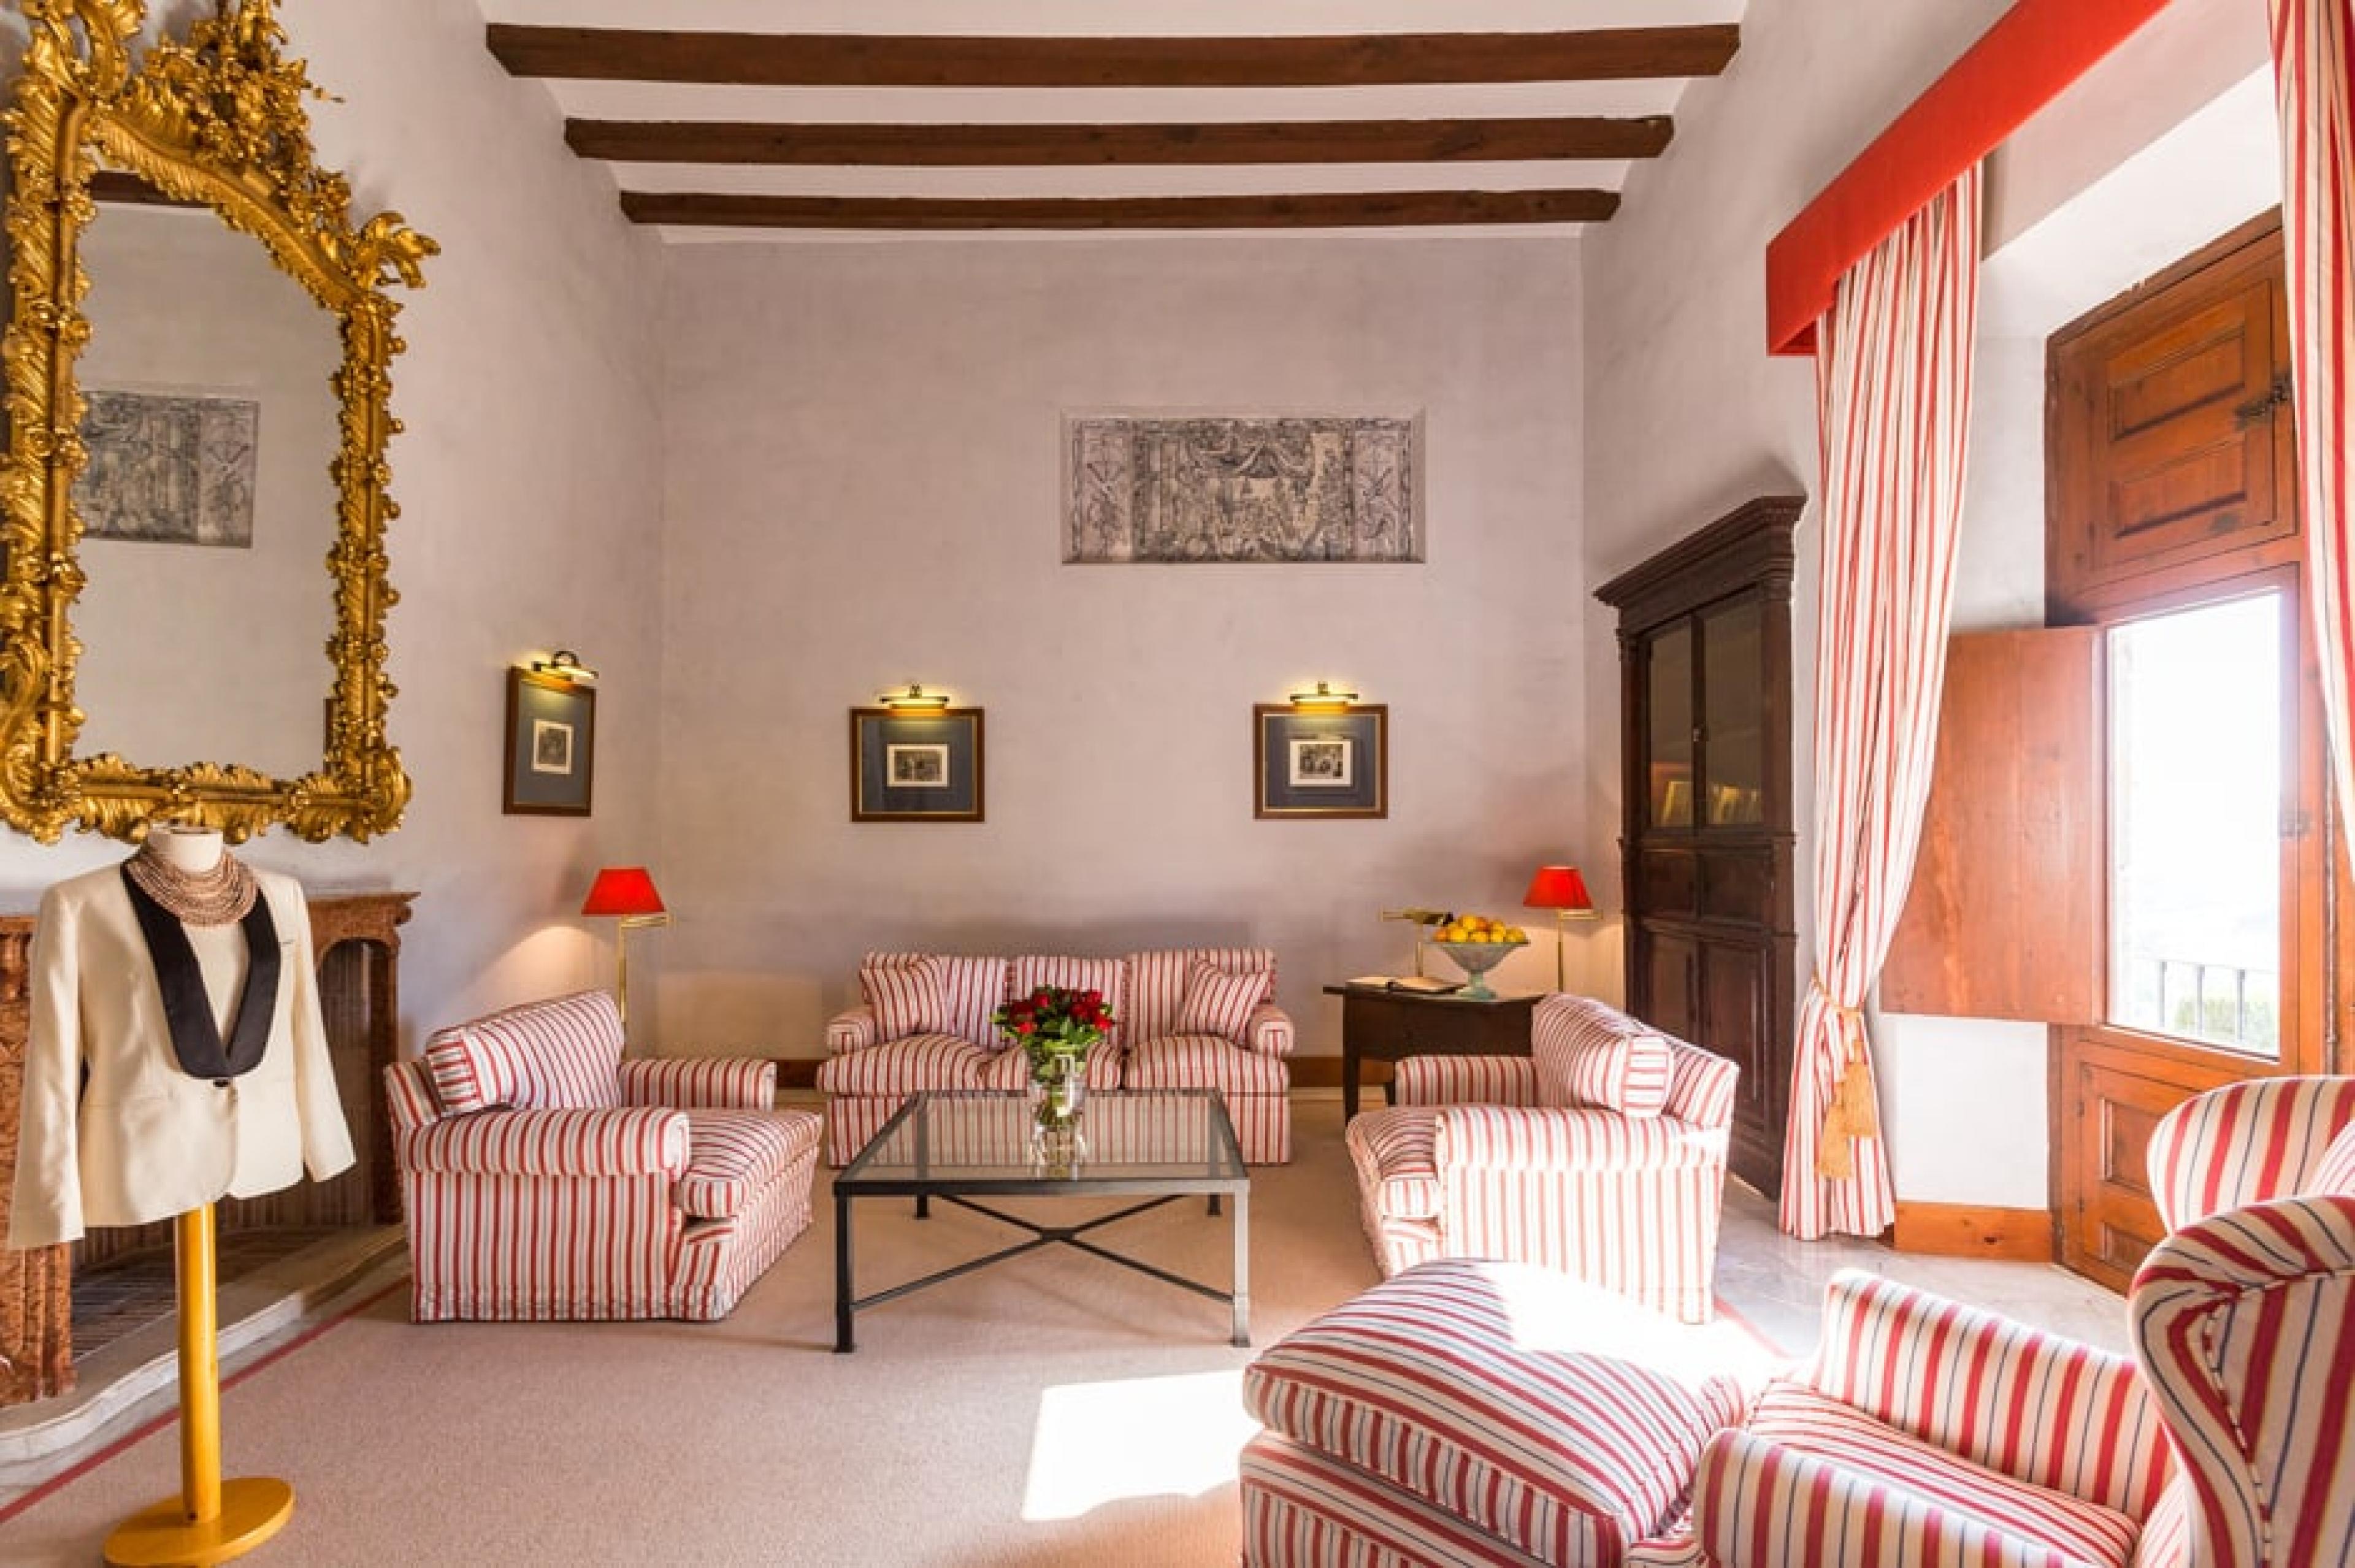 Living Room at Gran Hotel Son Net, Mallorca, Spain